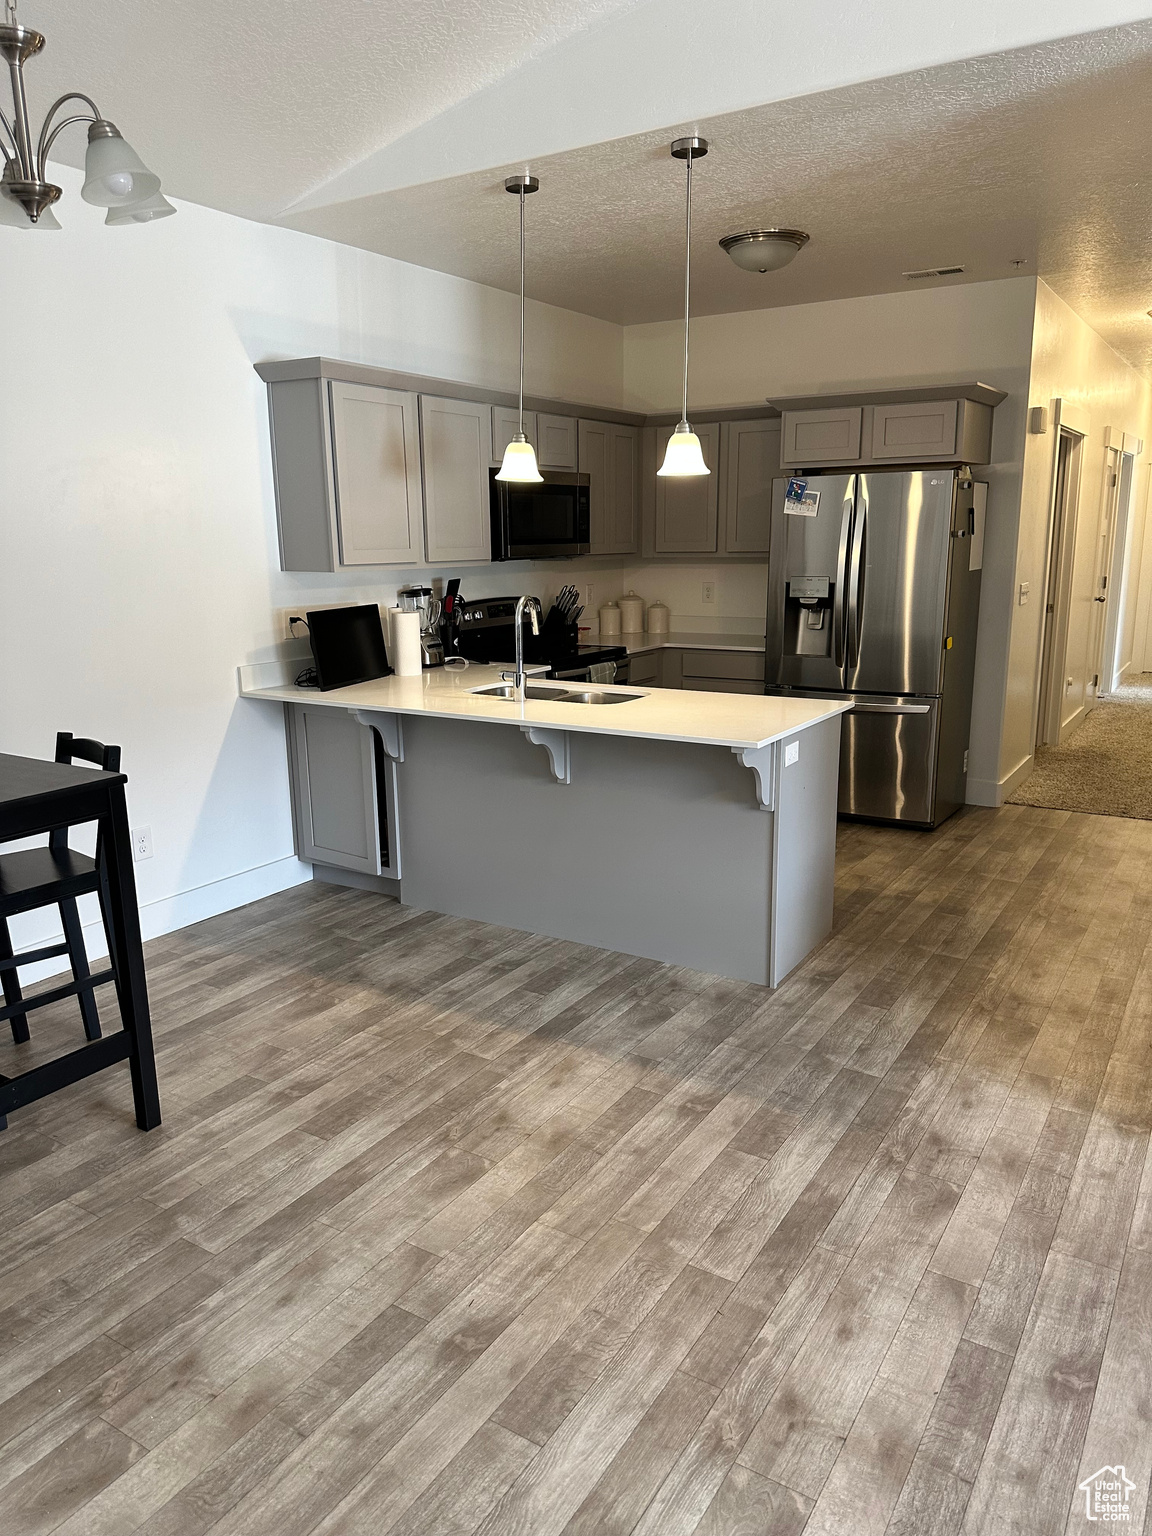 Kitchen with pendant lighting, kitchen peninsula, stainless steel appliances, a breakfast bar area, and hardwood / wood-style flooring